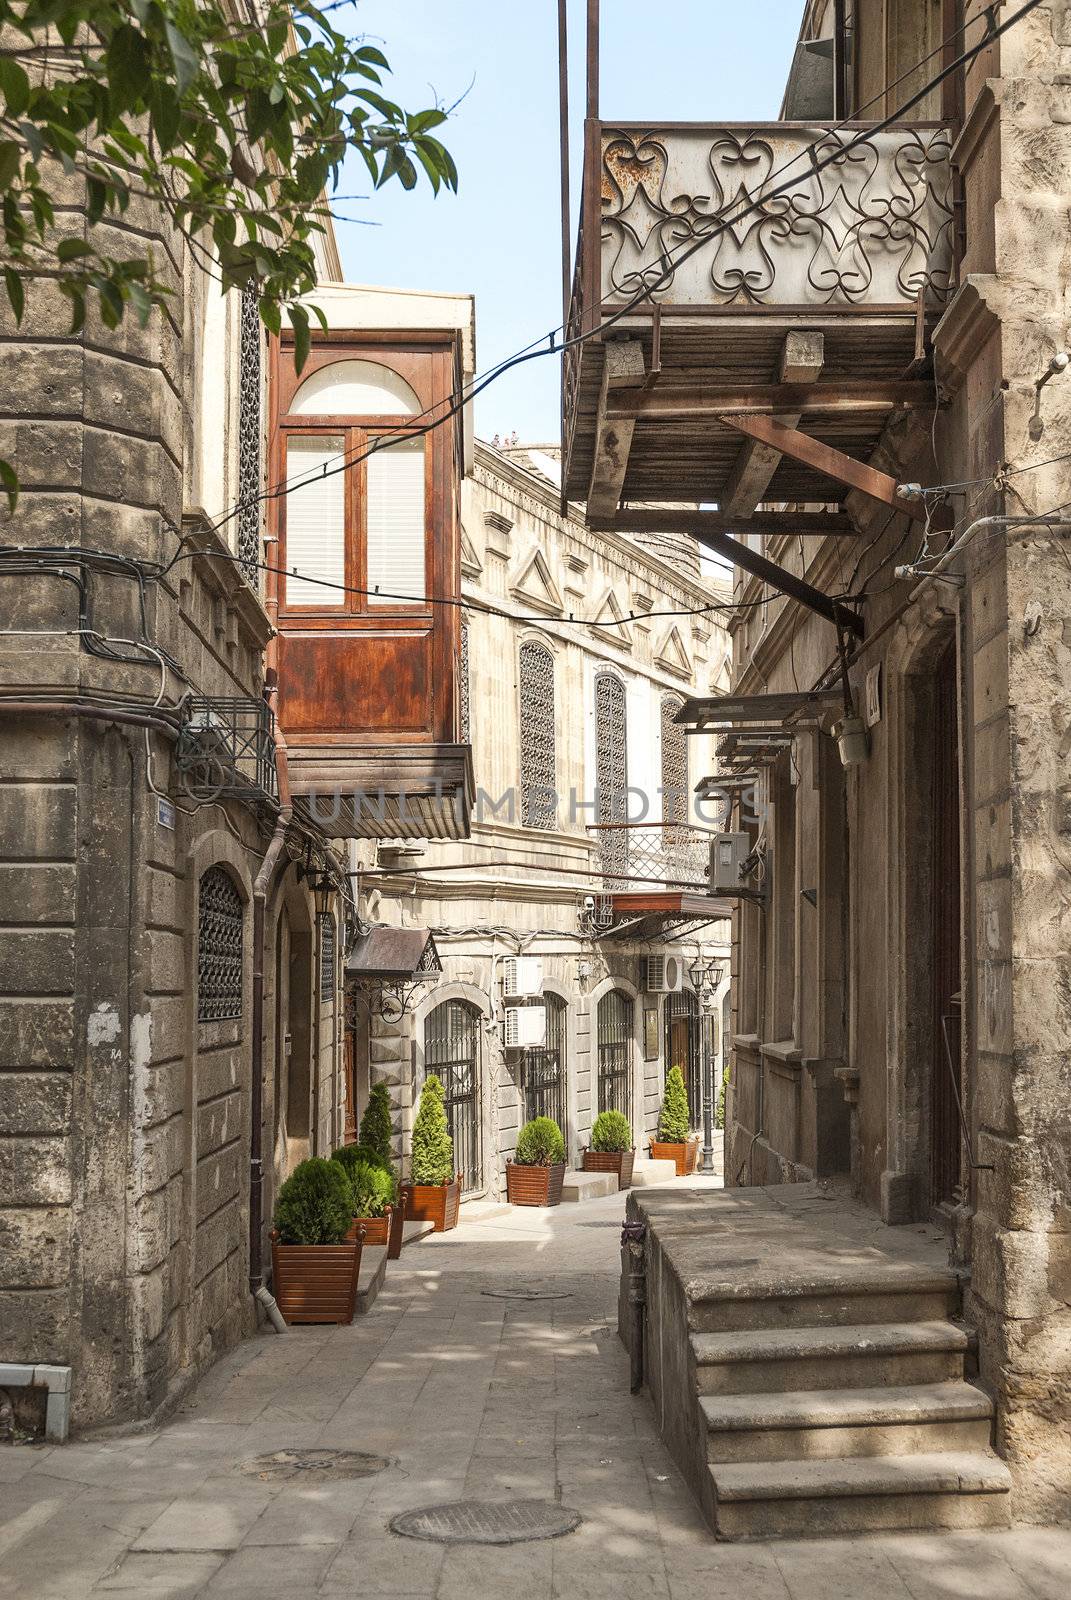 architecture in baku azerbaijan by jackmalipan